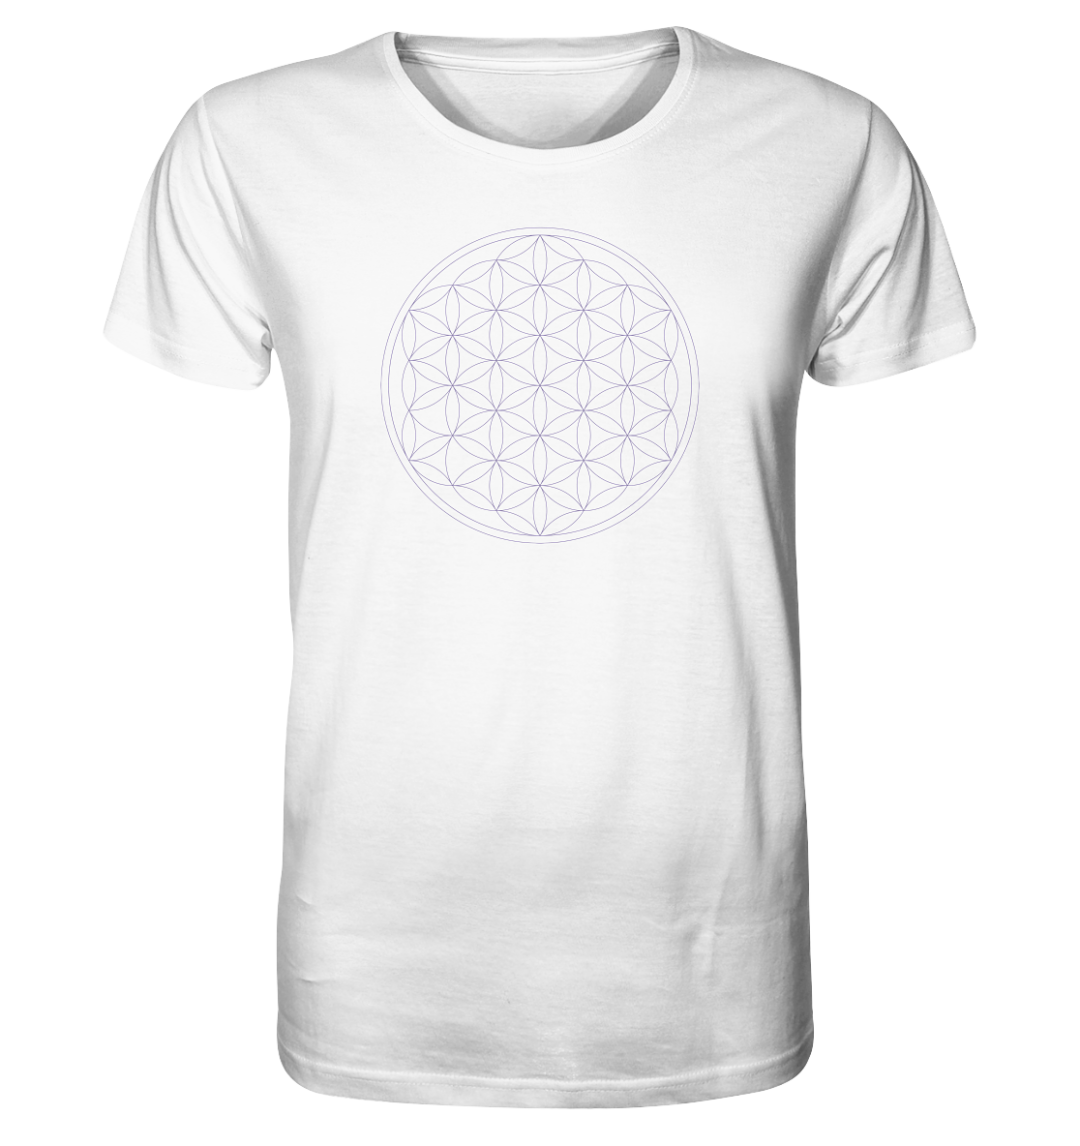 front organic shirt f8f8f8 1116x 2 Flower of Life - Organic Shirt